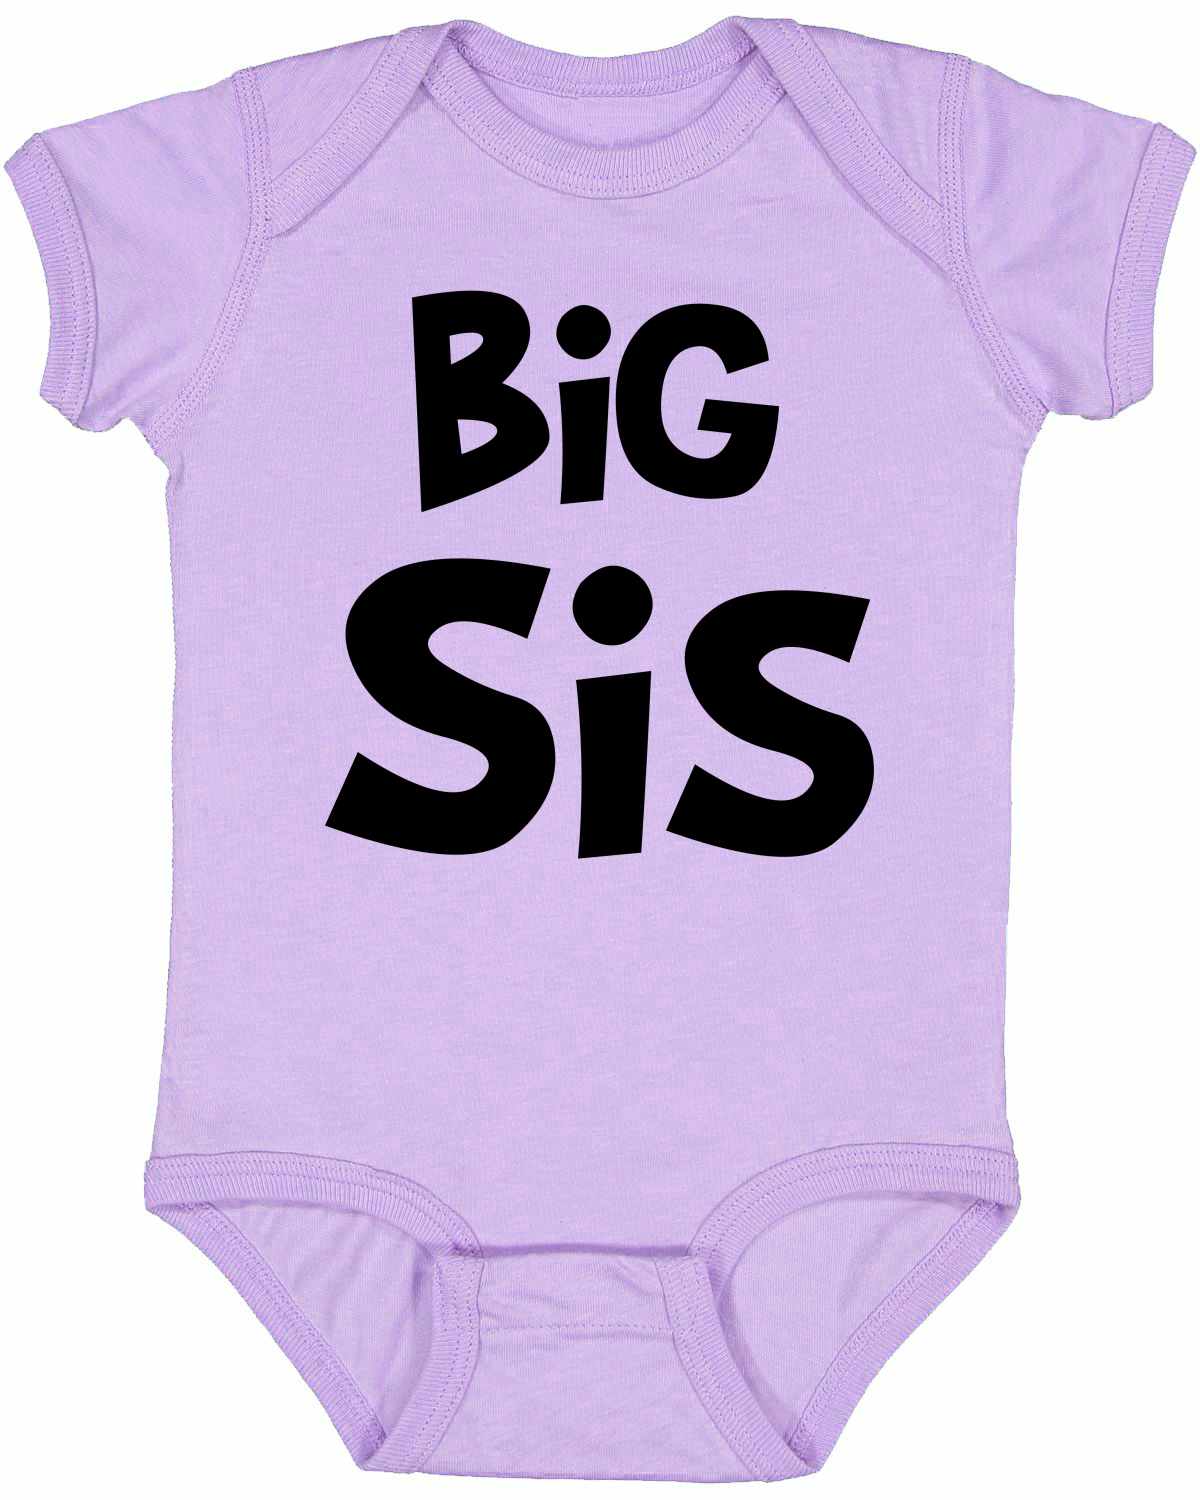 Big Sis Infant BodySuit (#1142-10)